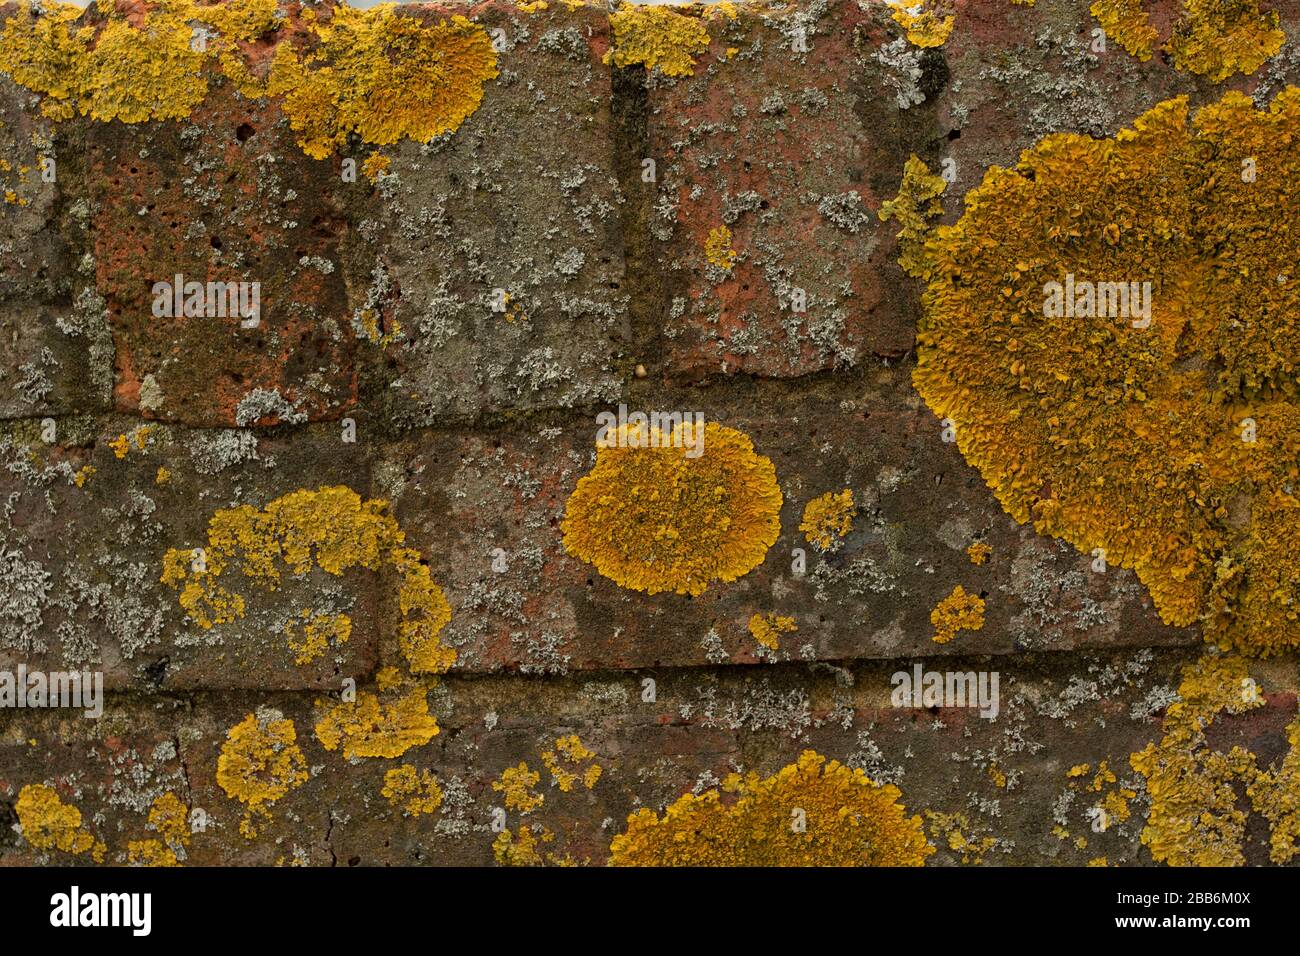 Yellow moss growing on brick wall nature close-up still-life Stock Photo